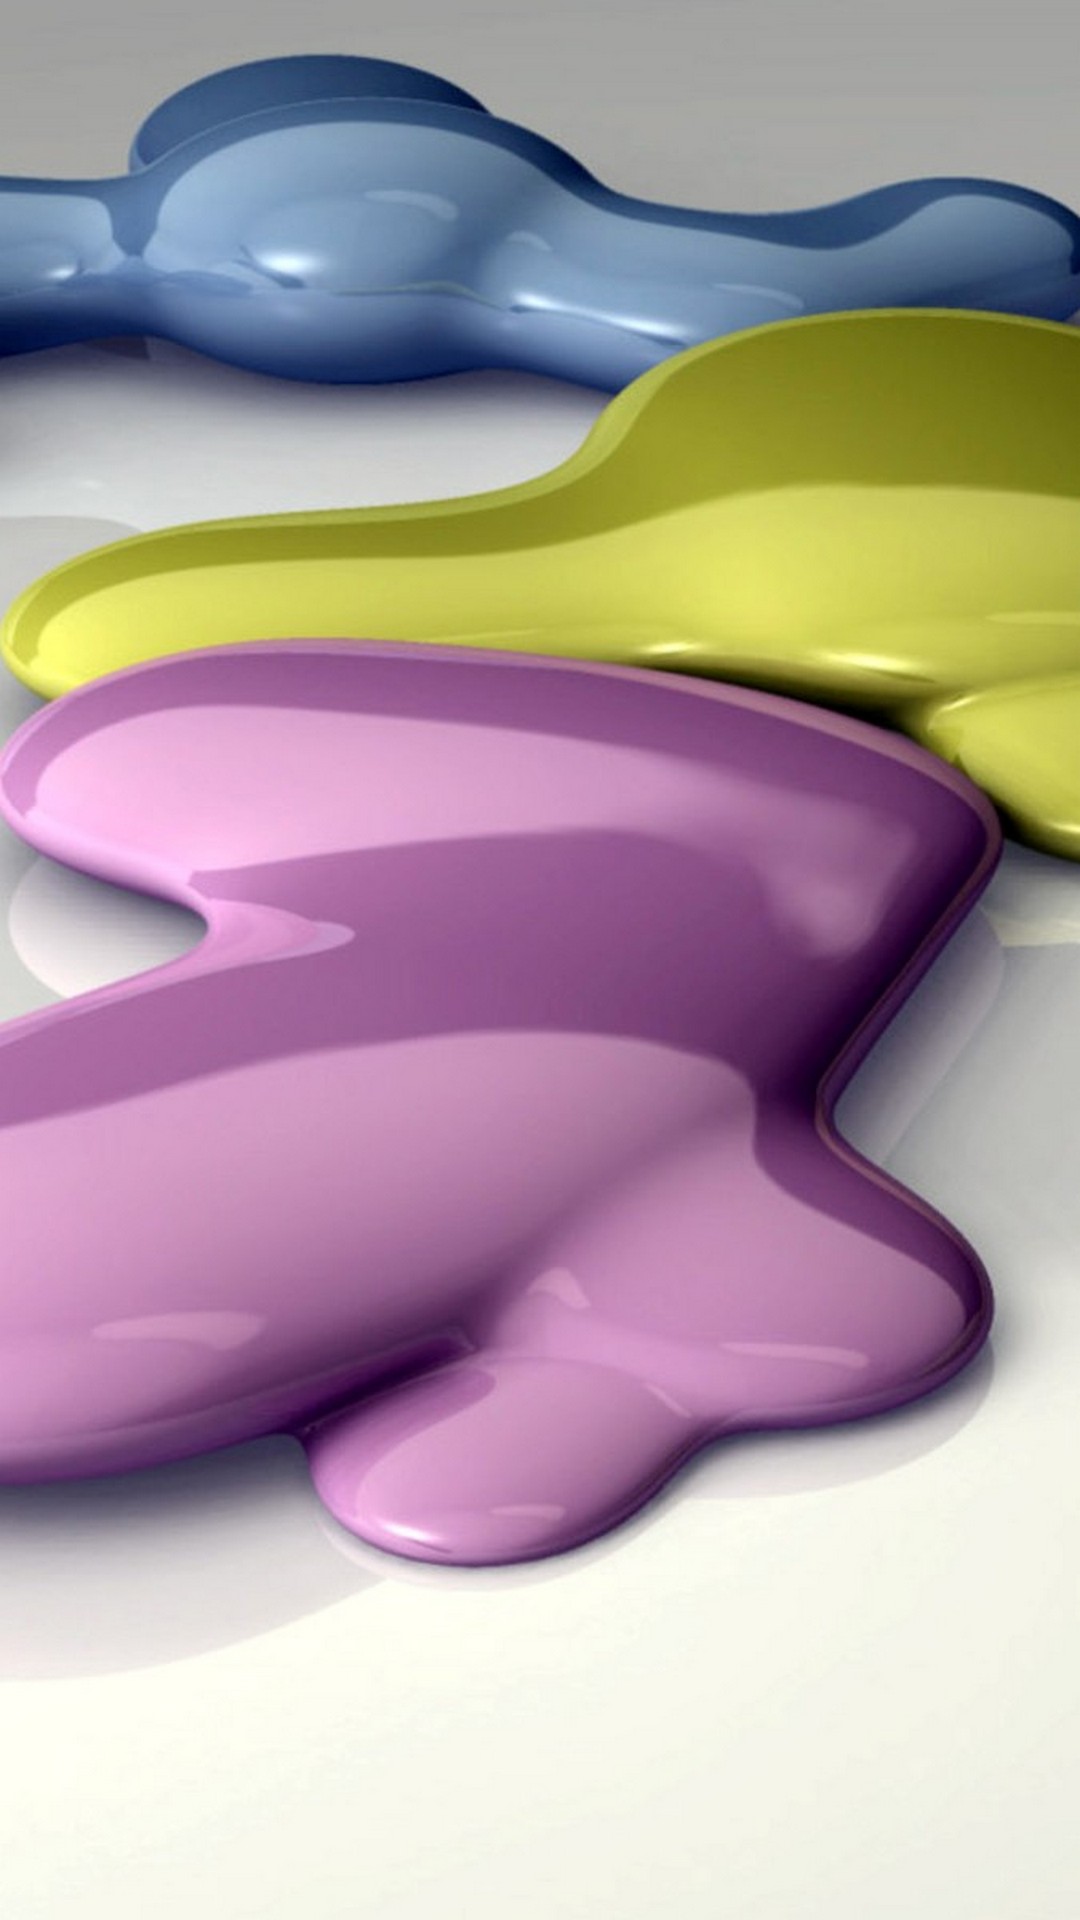 3D Liquid Wallpaper For Mobile resolution 1080x1920